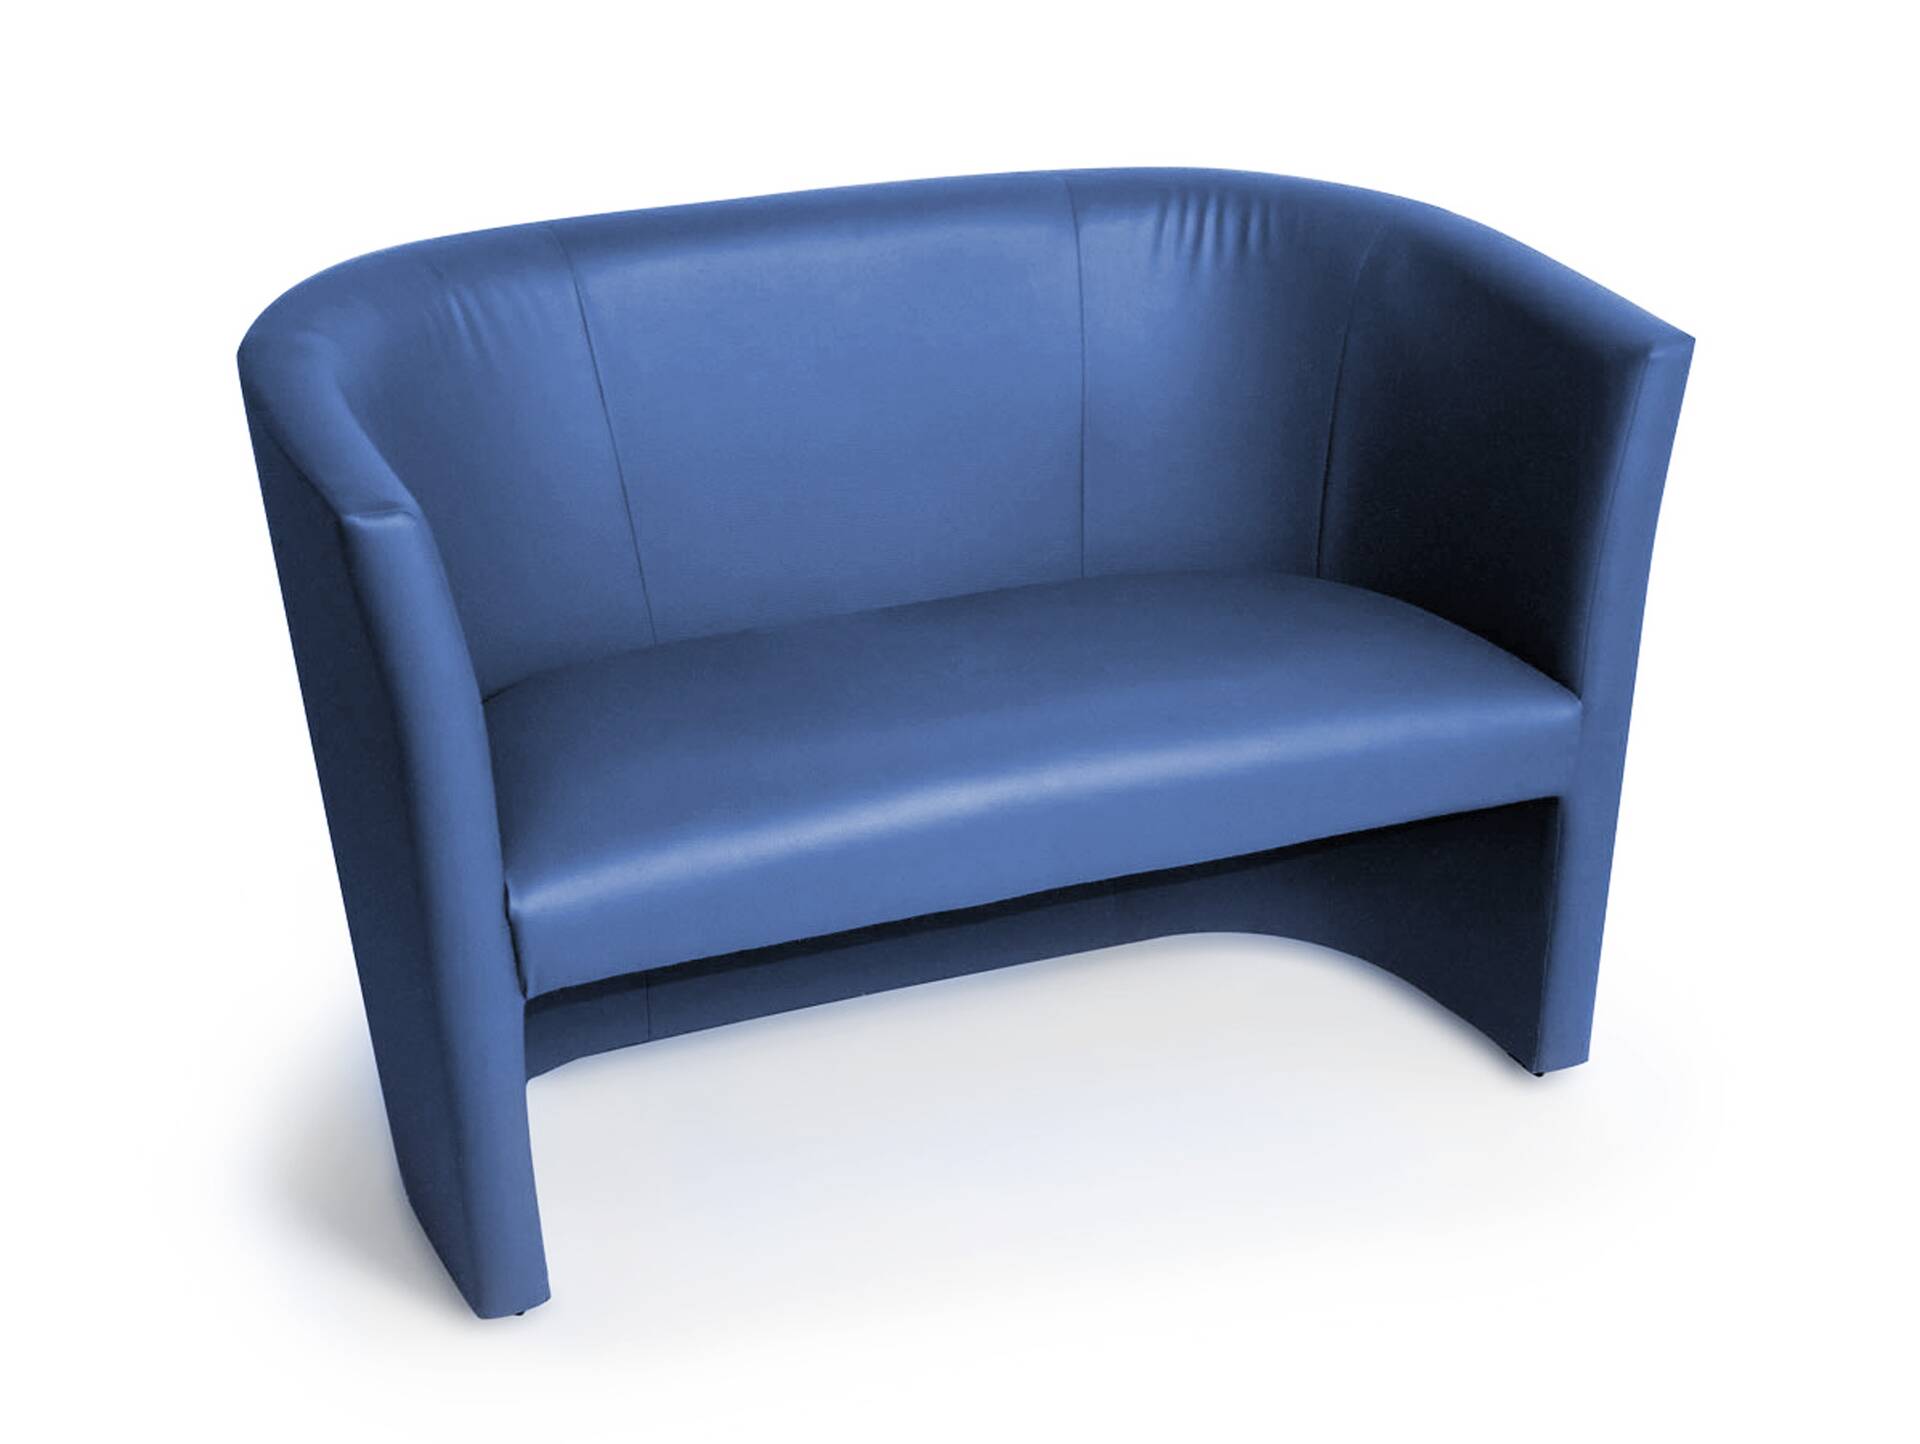 CHARLY DUO Cocktailsessel Material blau Kunstleder Sessel, 